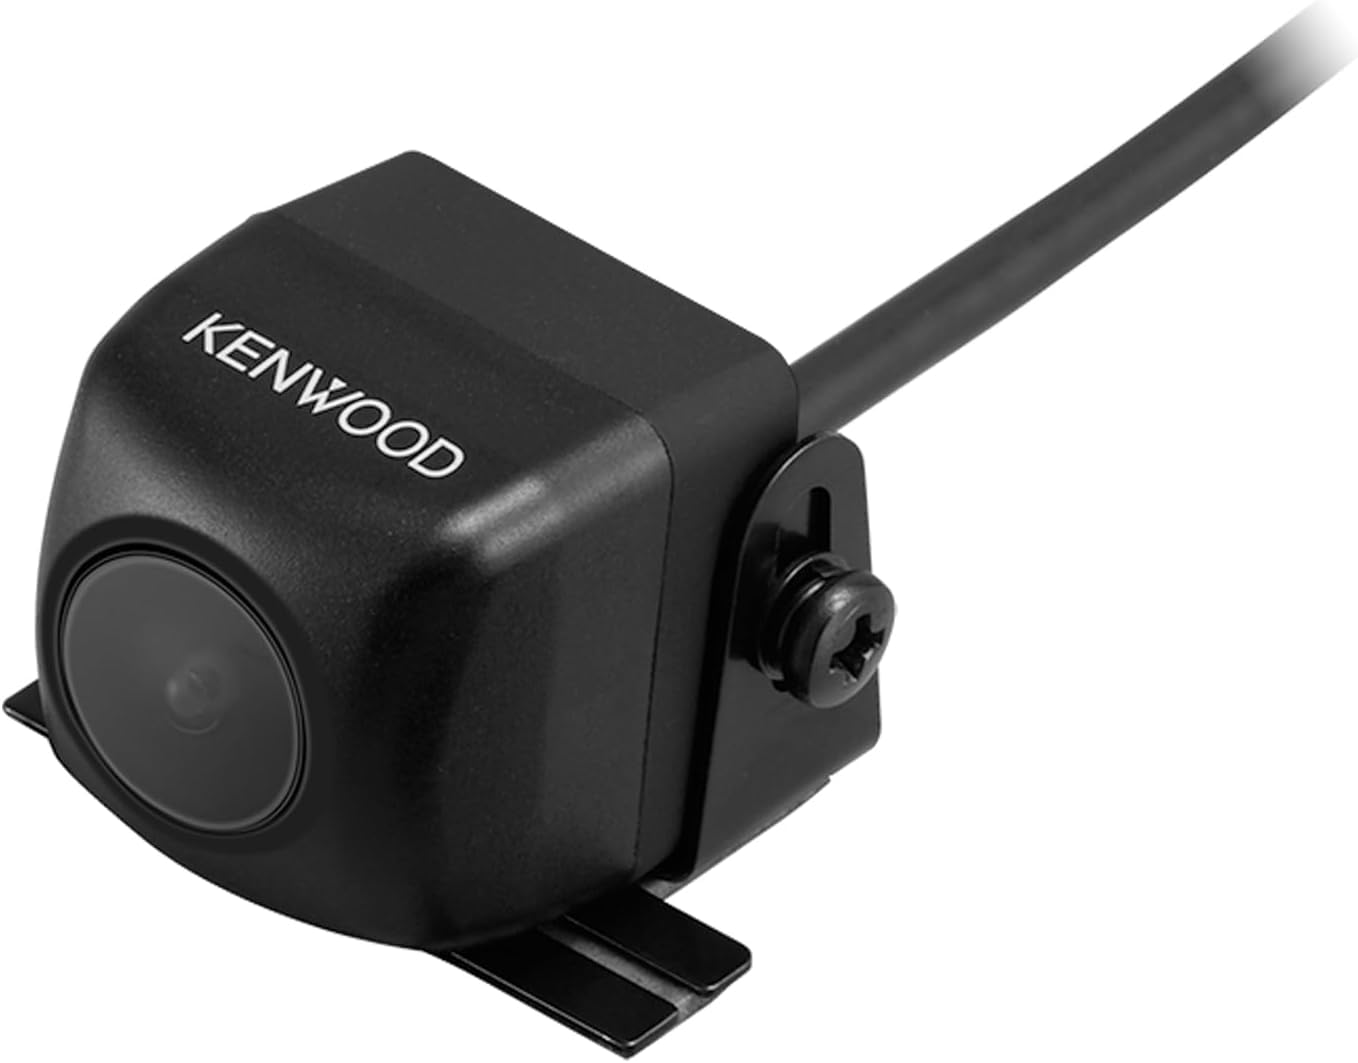 Kenwood DDX5707S 6.8" AM FM BT DVD Car Stereo- Apple CarPlay, Android Auto + CMOS-230 Backup Camera